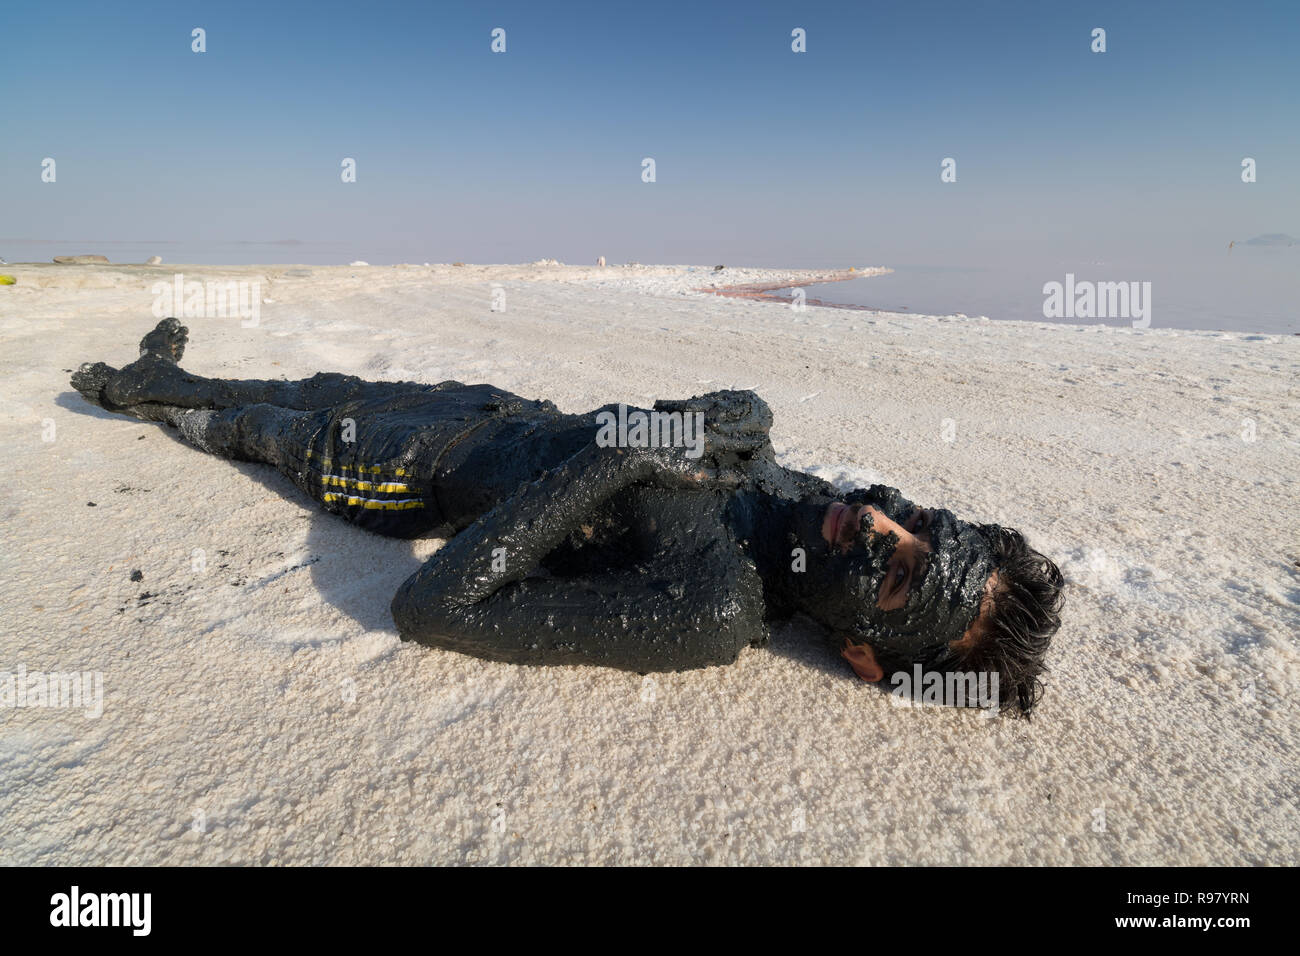 Urmia lake-A man coats himself in black mud at Lake Urmia, a salt lake in the province of West Azerbaijan. Stock Photo